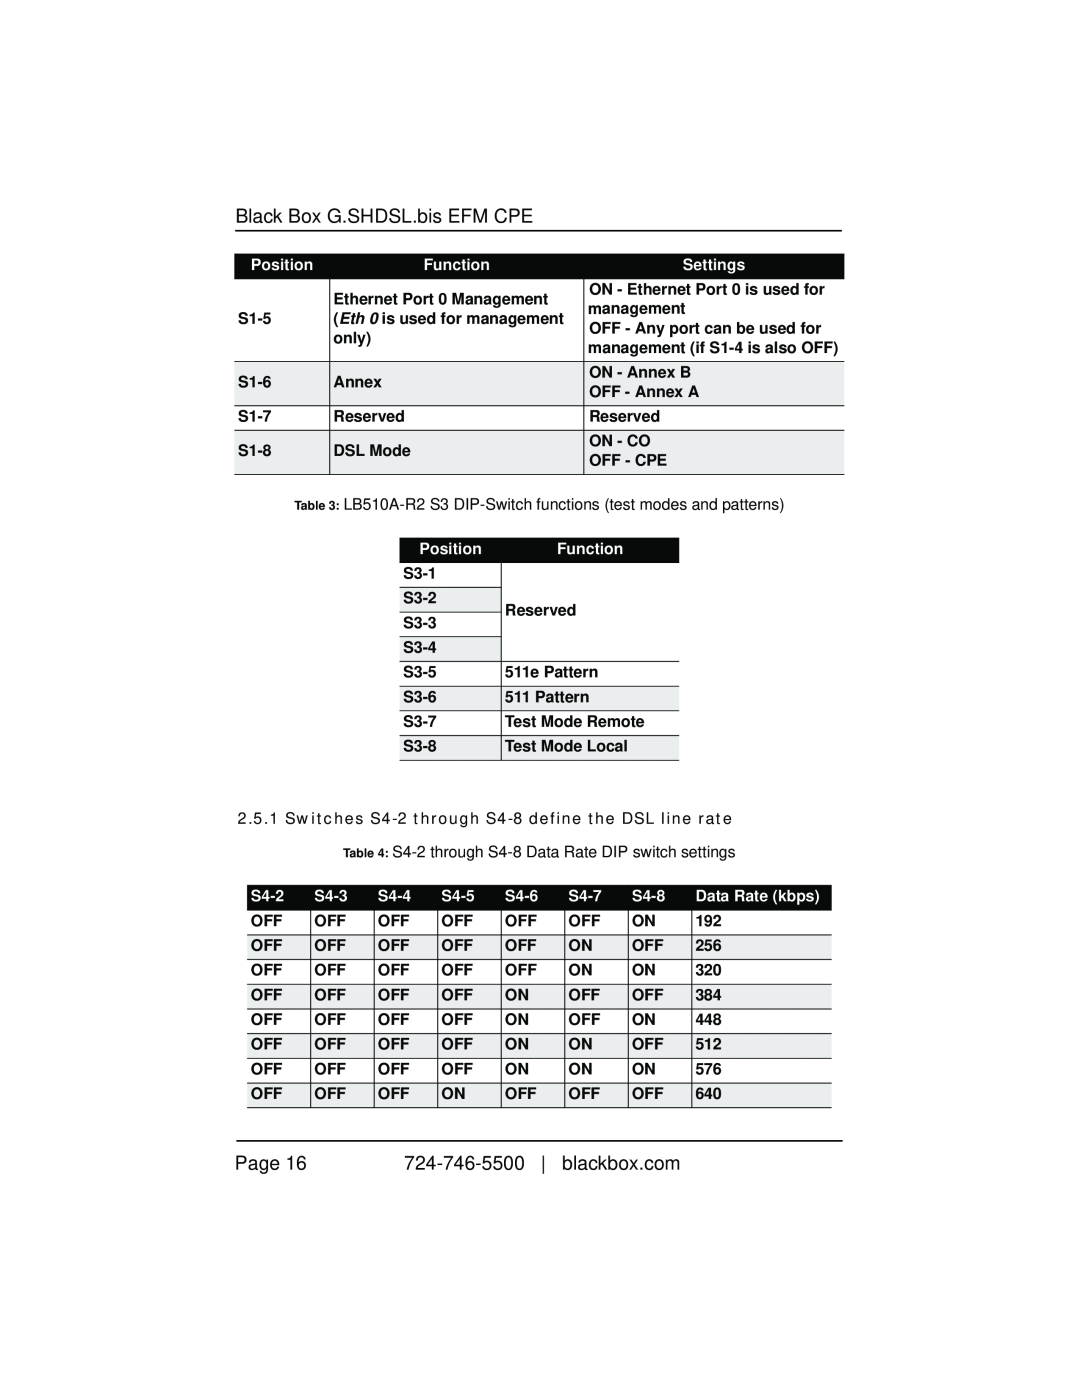 Black Box LB510A-R2 manual S4-2, S4-3, S4-4, S4-5, S4-6, S4-7, S4-8, Data Rate kbps, Black Box G.SHDSL.bis EFM CPE, Page 